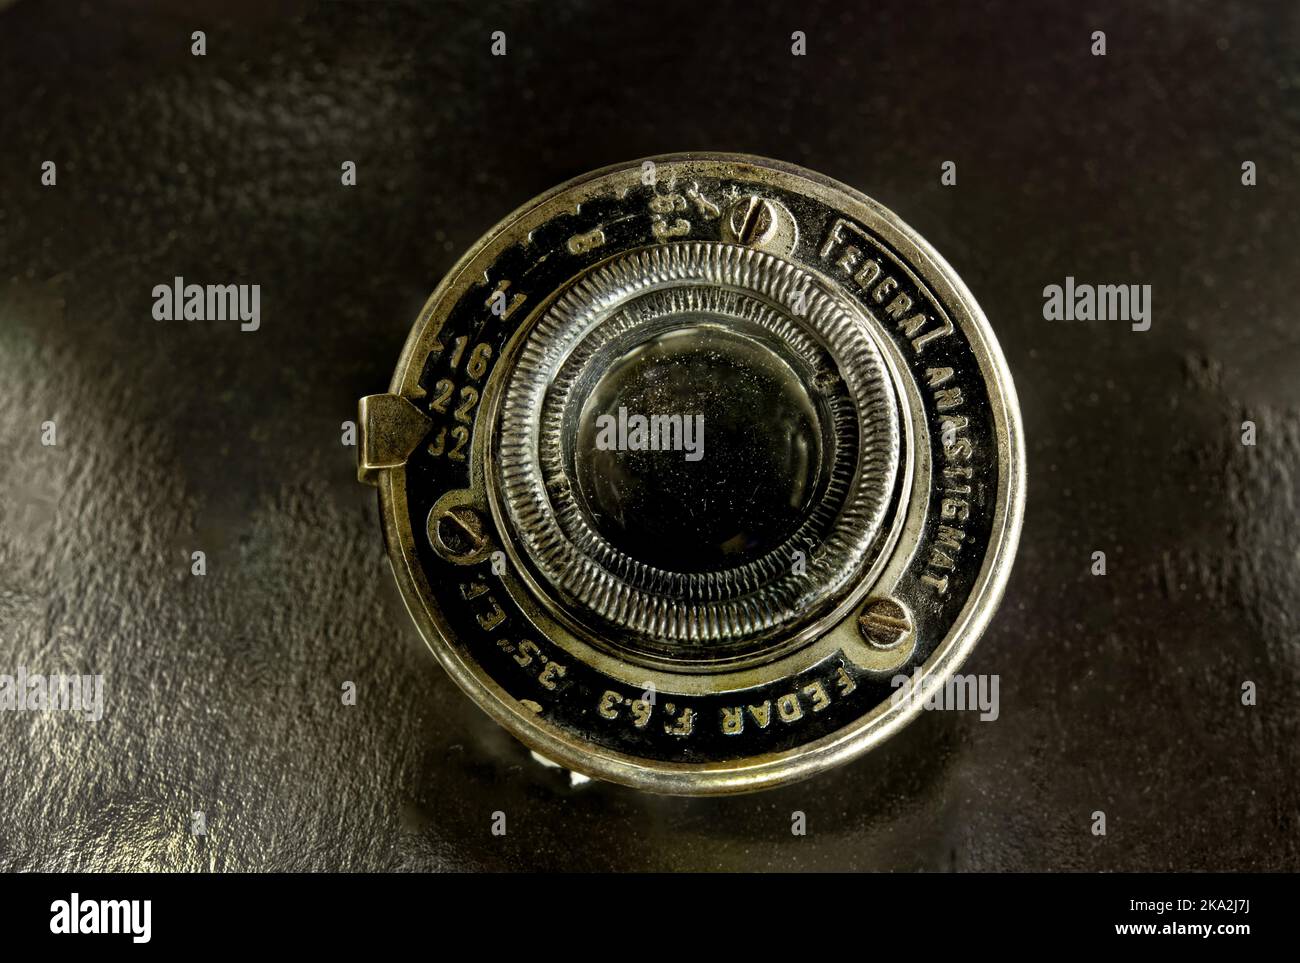 10 26 2014 Vintage Federal anastigmat Fedar f 6,3 telecamera analogica con obiettivo Lokgram Kalyan Maharashtra India. Foto Stock